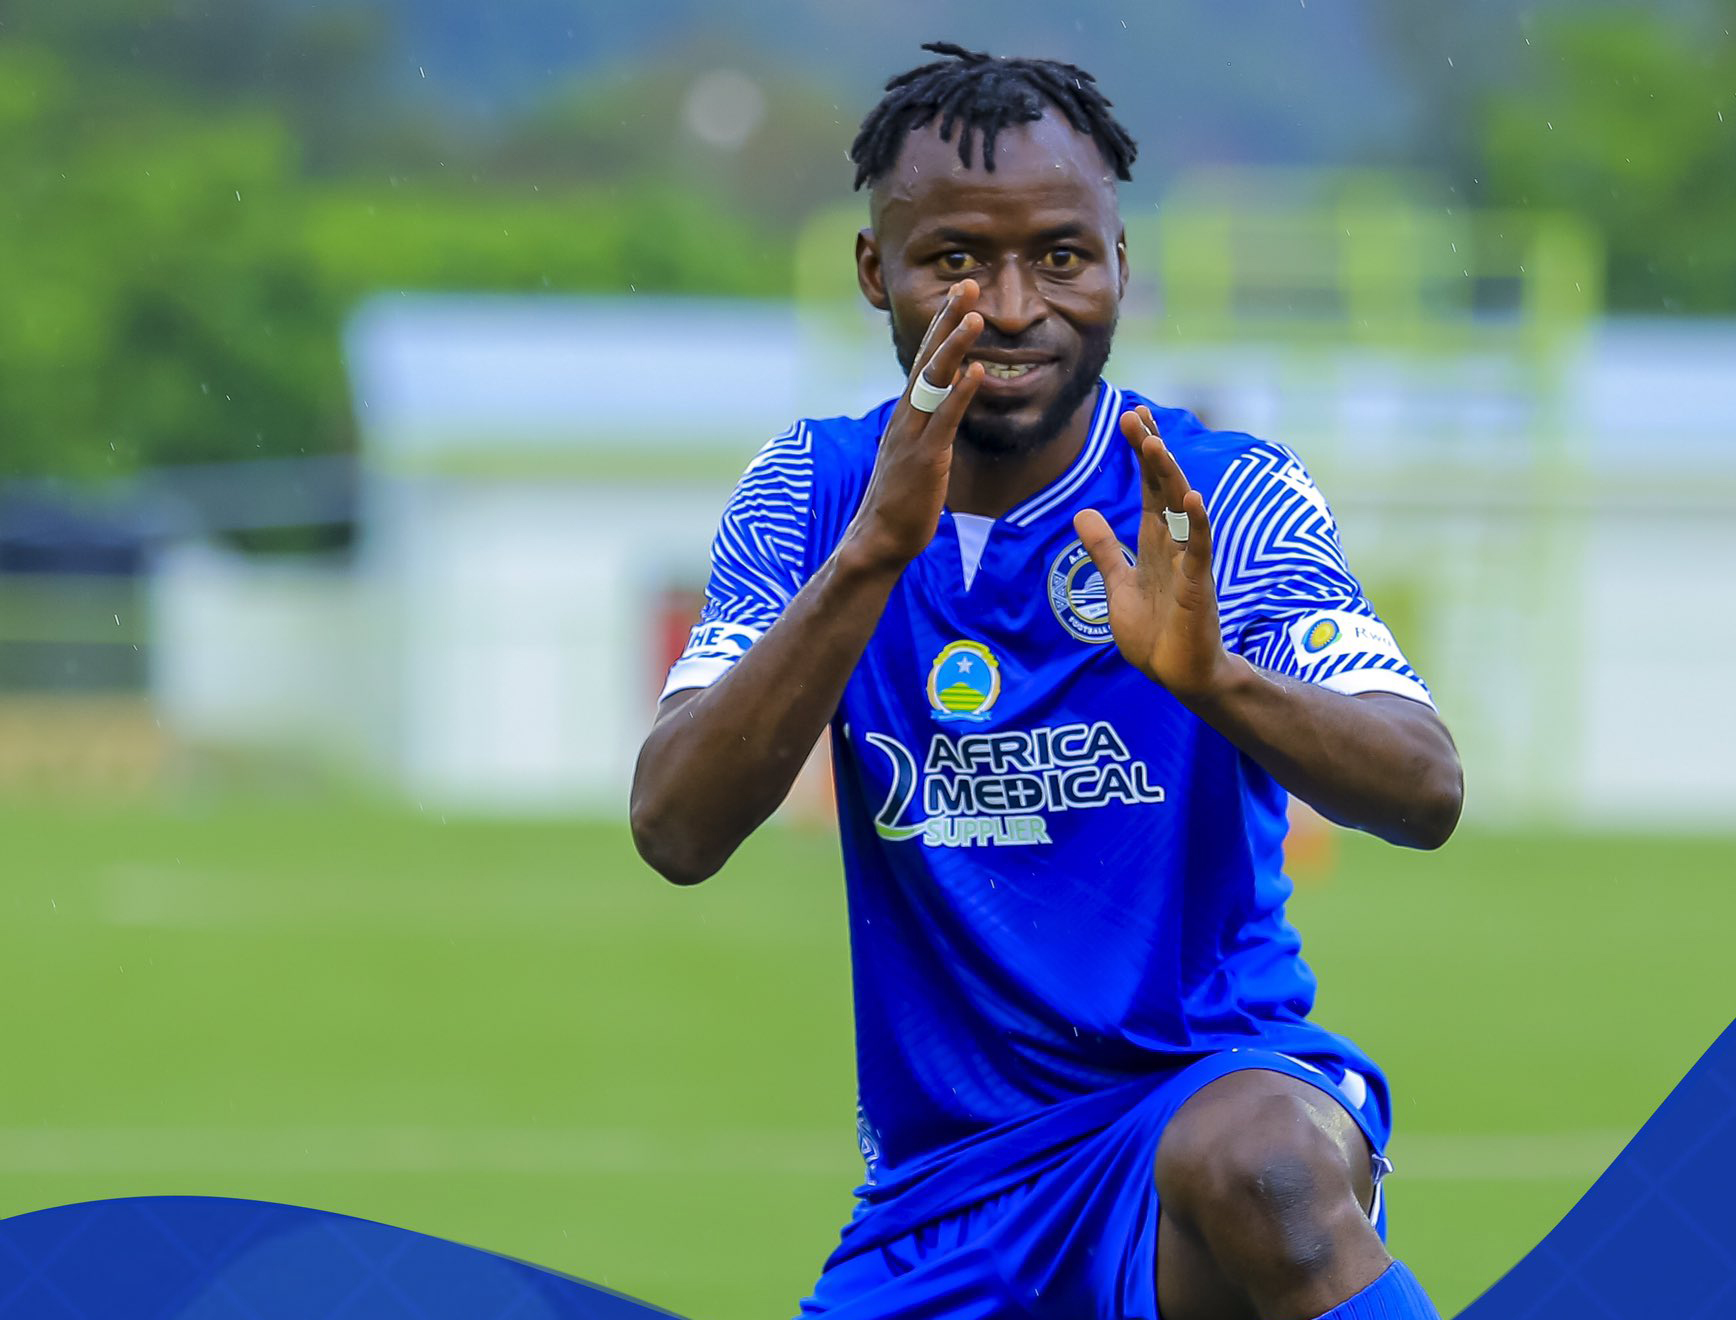 AS Kigali striker Hussein Shabalala celebrates a goal during the match against APR FC at Kigali Stadium. The Burundian scored the most goals last season. Courtesy.